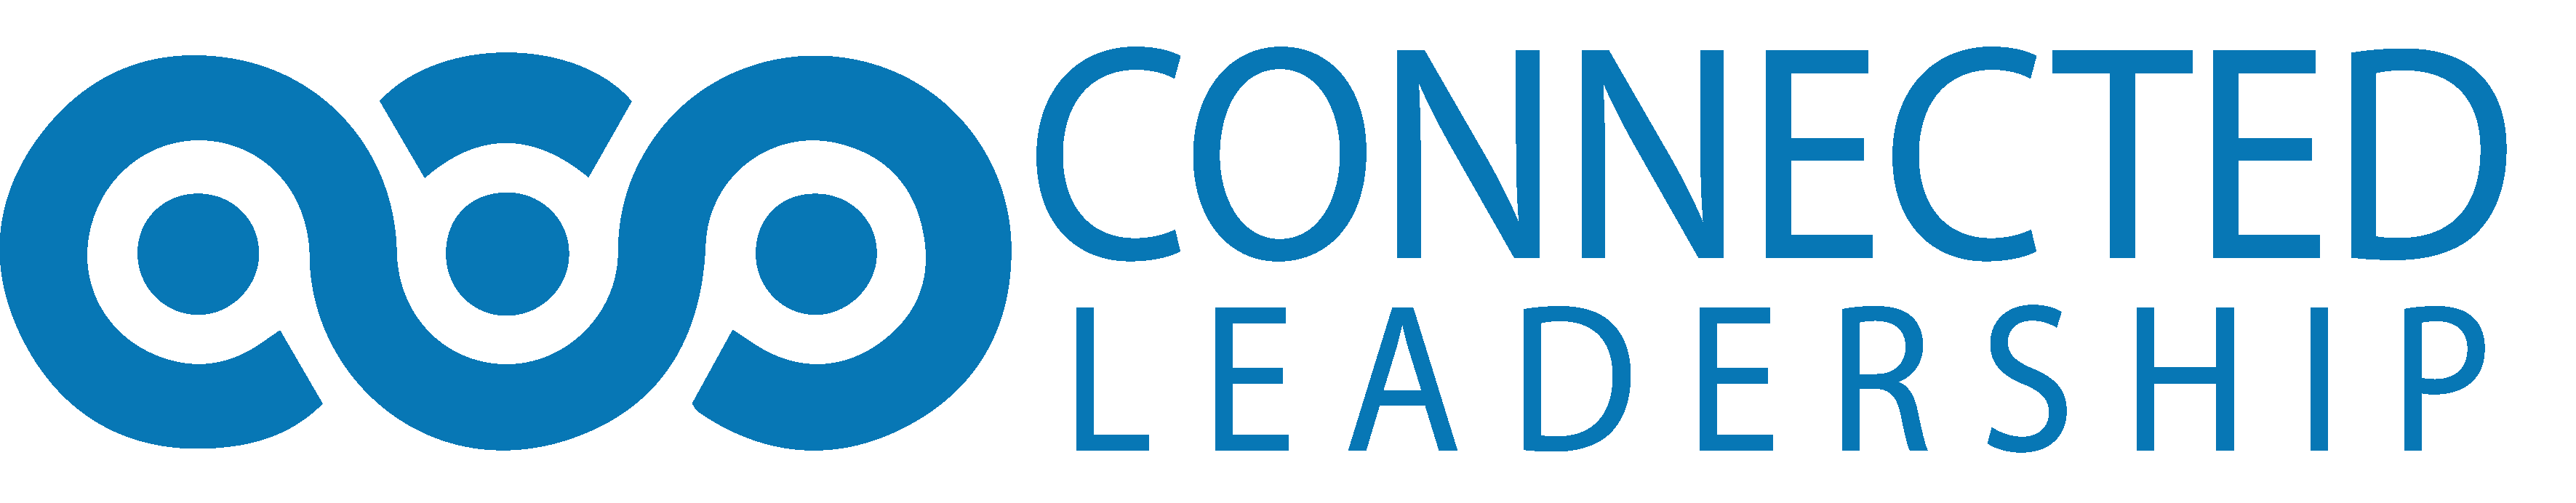 Connected Leadership - Unternehmensberatung Digitale Transformation